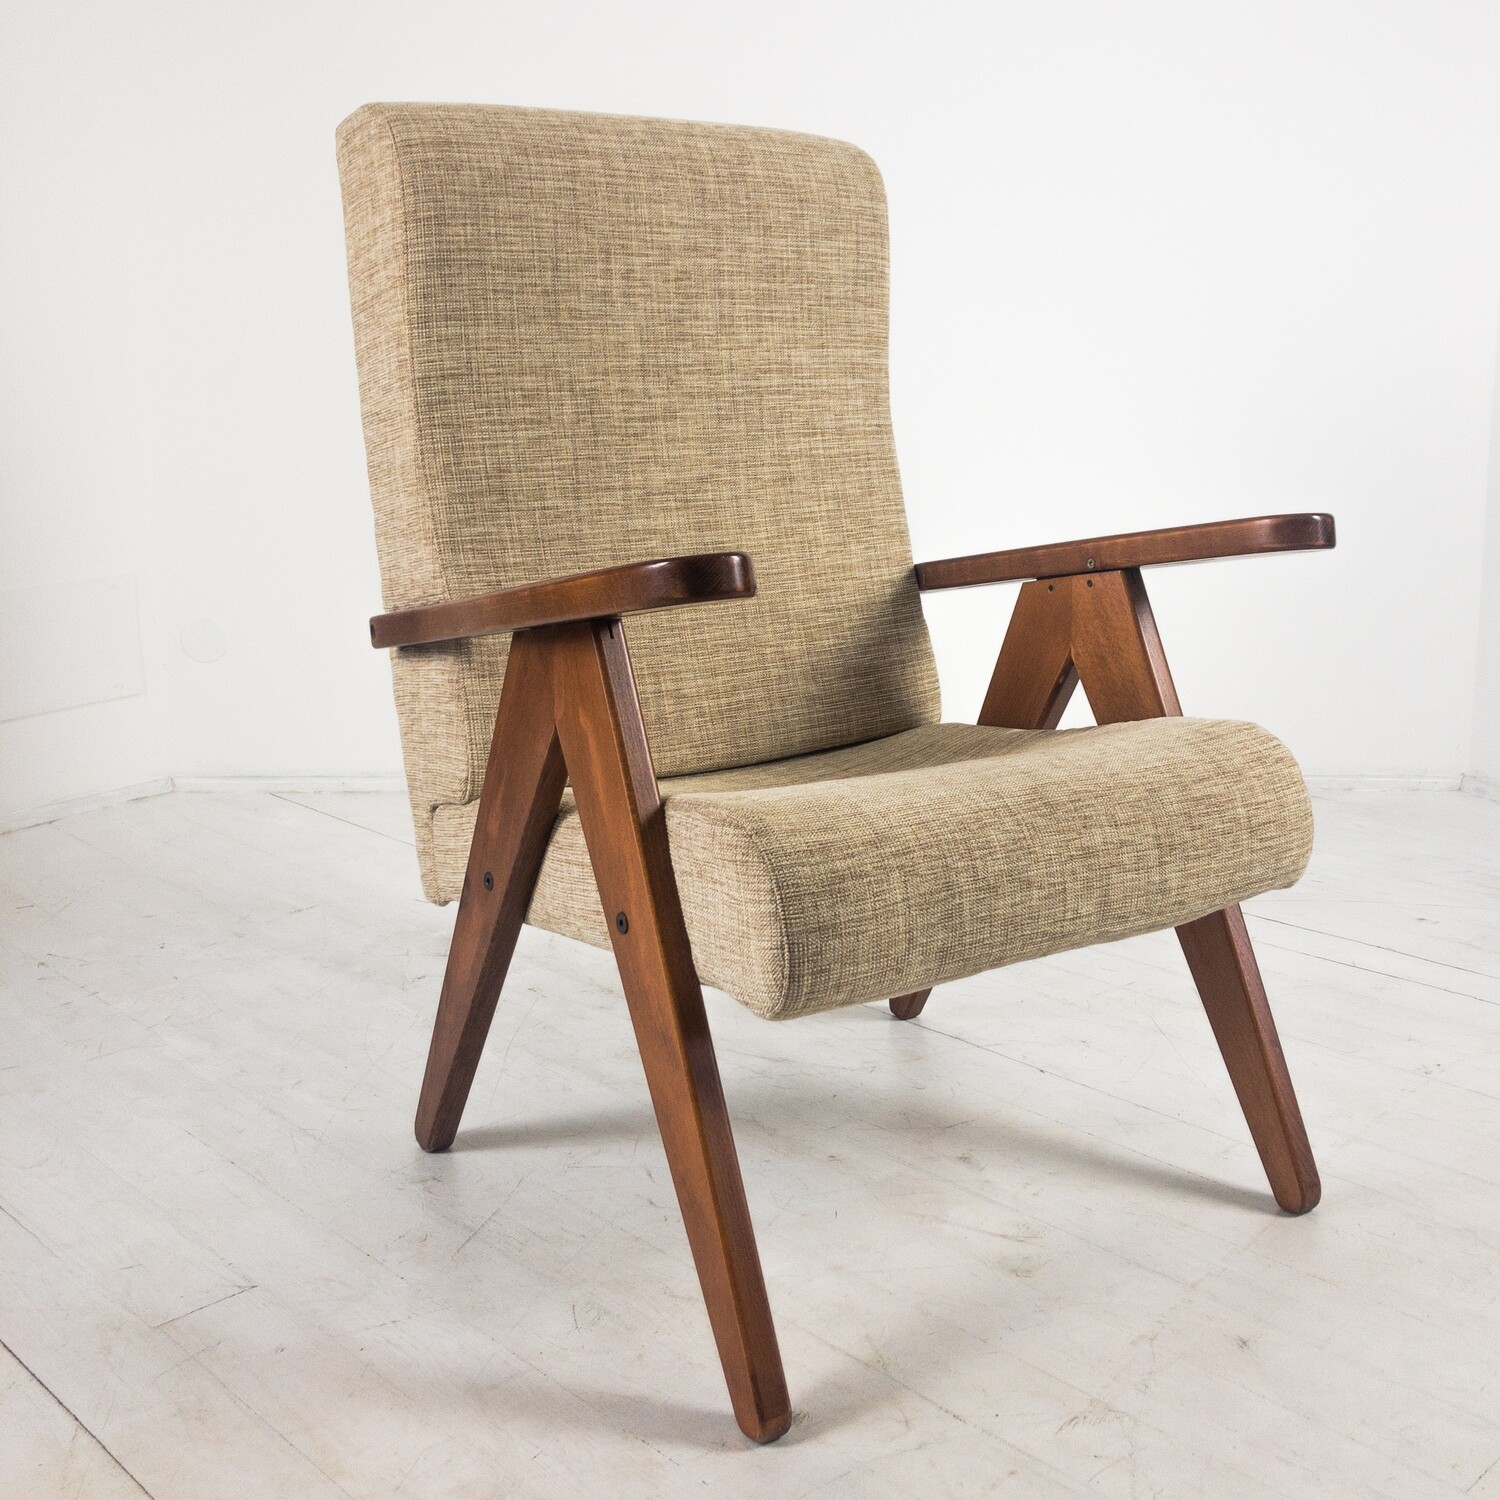 1950s Scandinavian style armchair